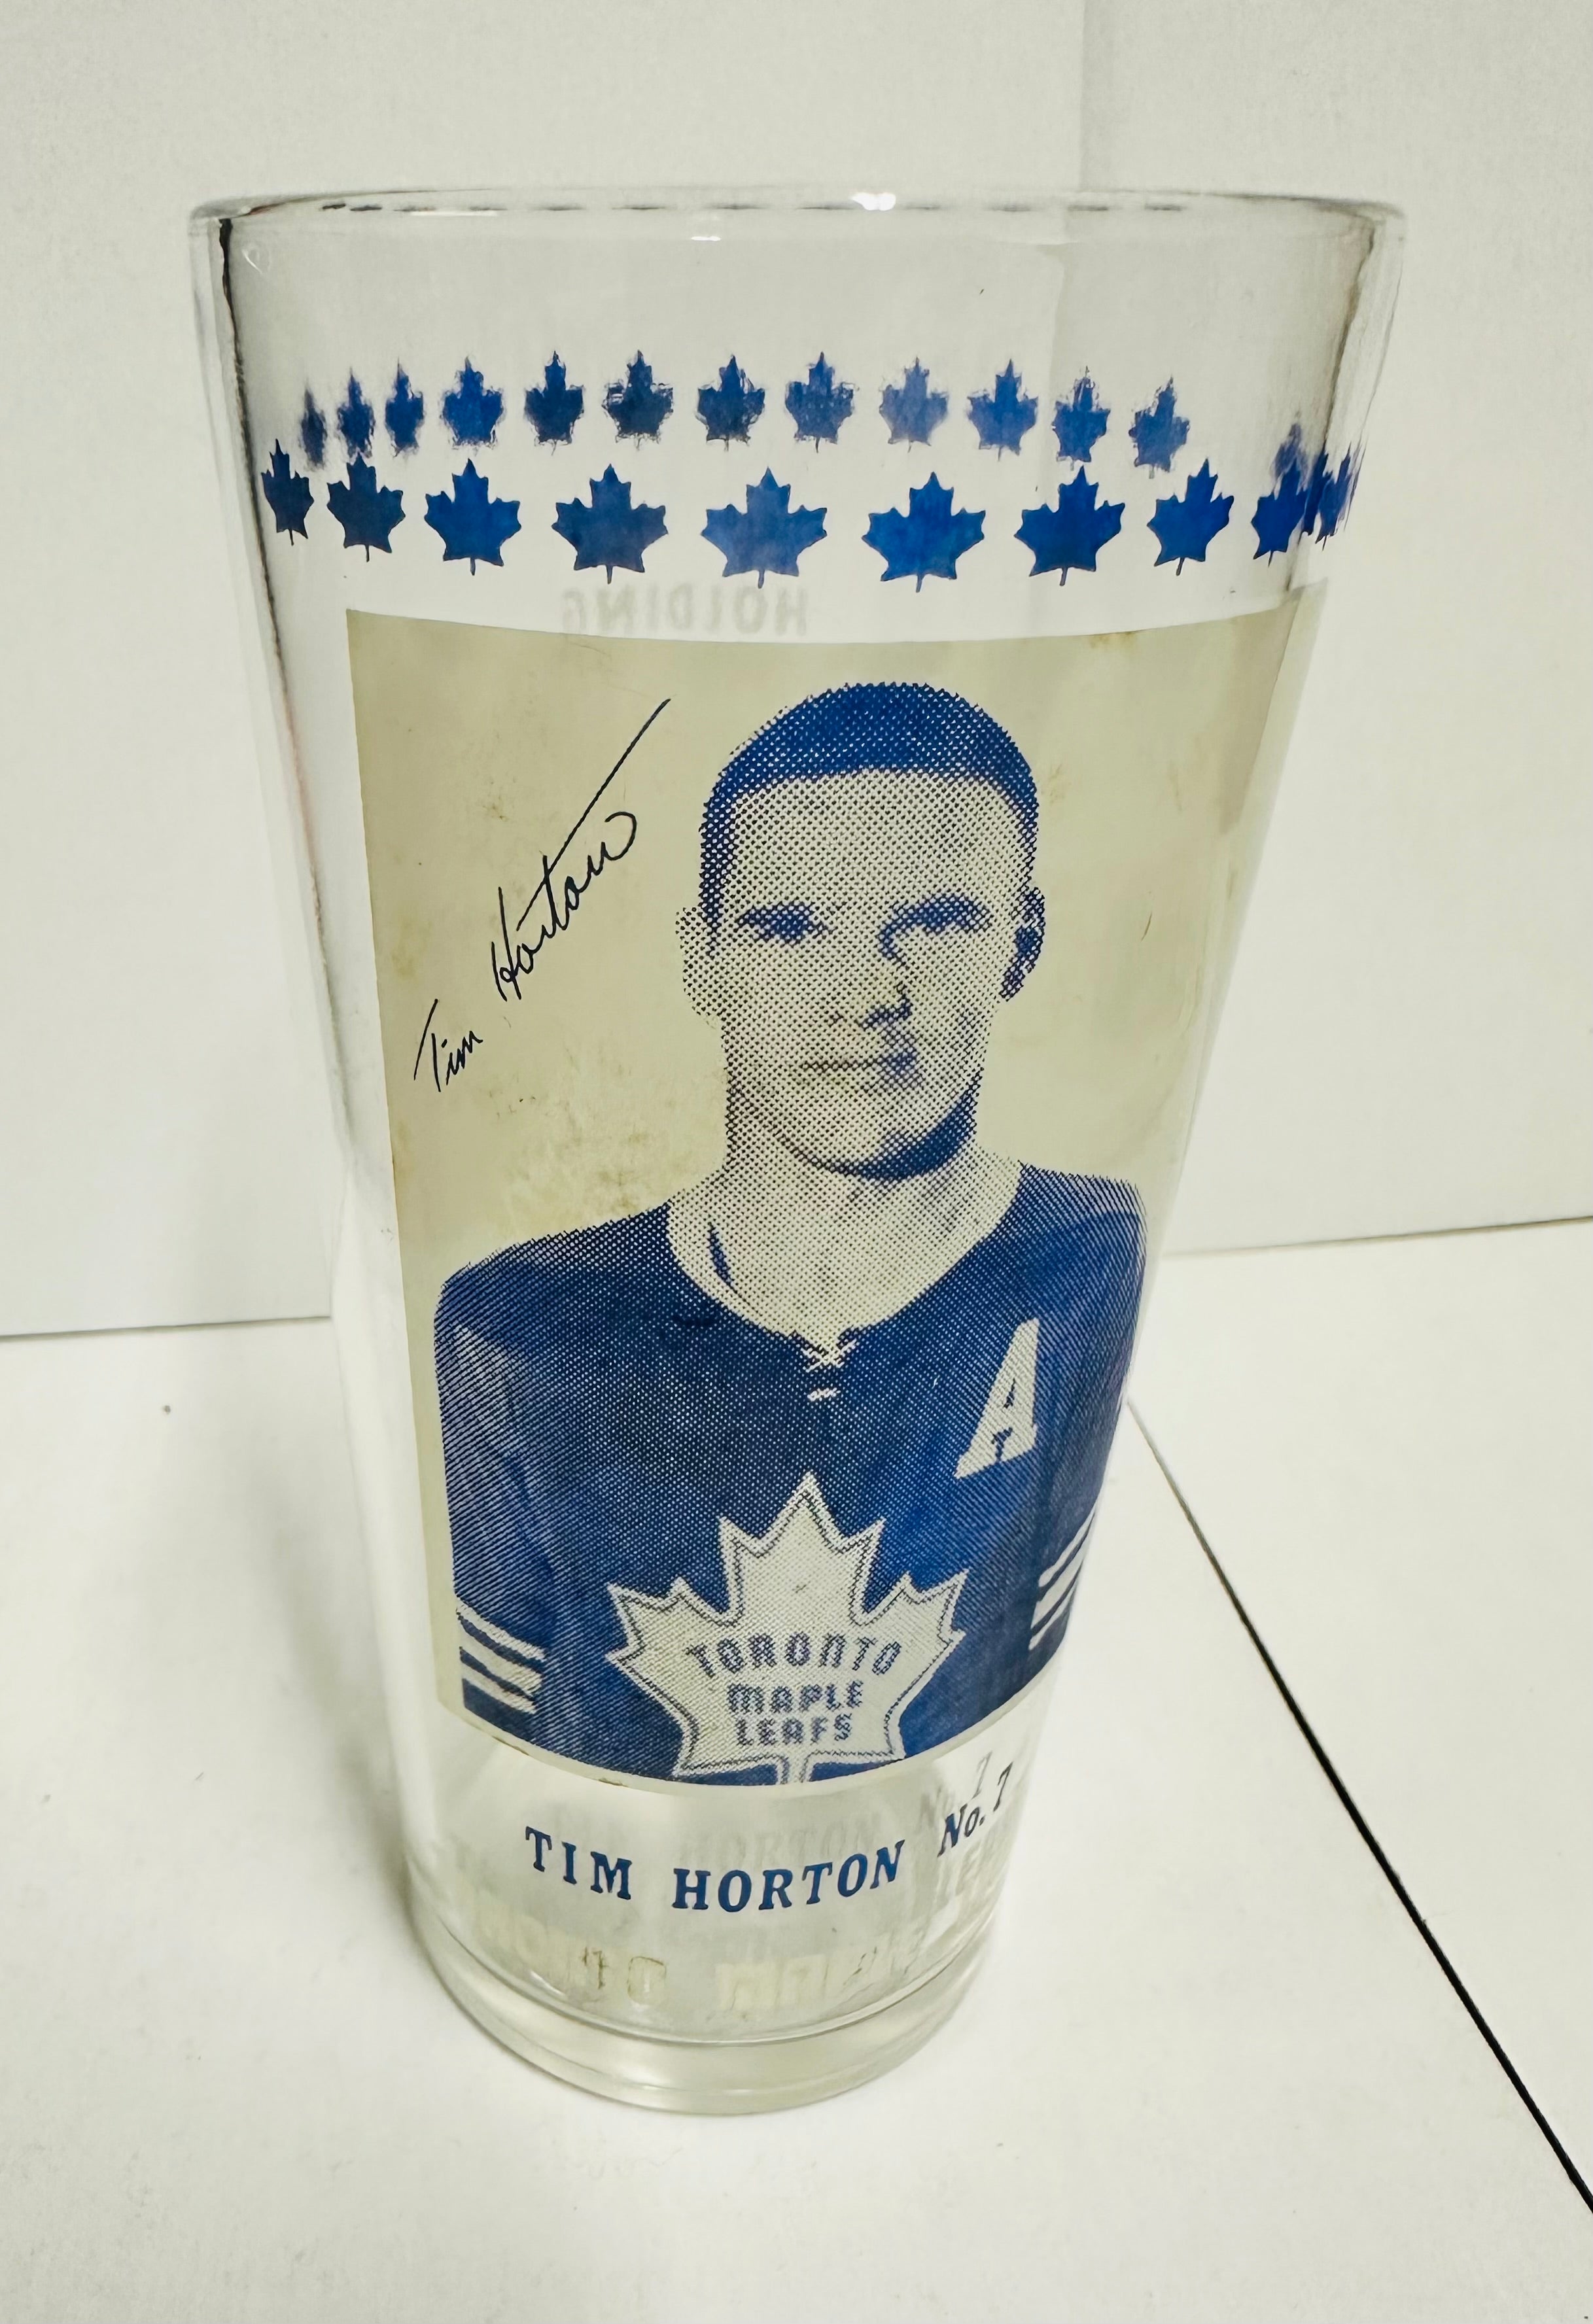 Tim Horton Toronto Maple Leafs hockey rare York Peanut Butter mail away glass 1960-61